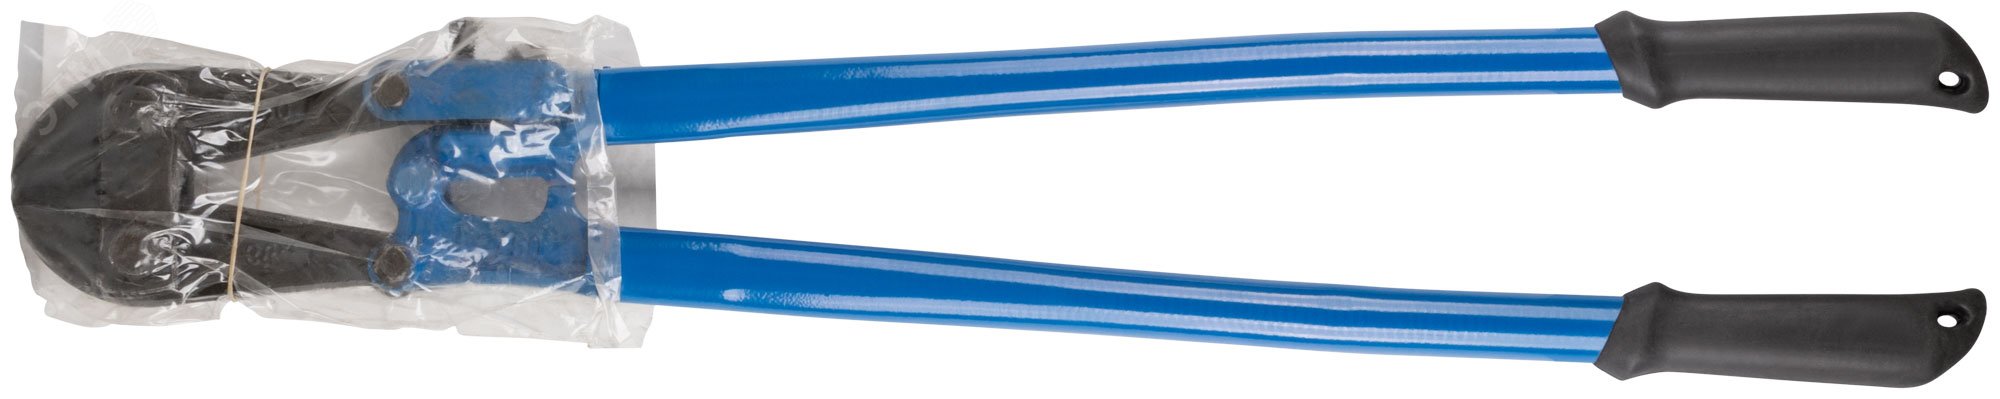 Болторез усиленный ''Профи'' HRC 58-59 (синий) 750 мм 41775 FIT - превью 3